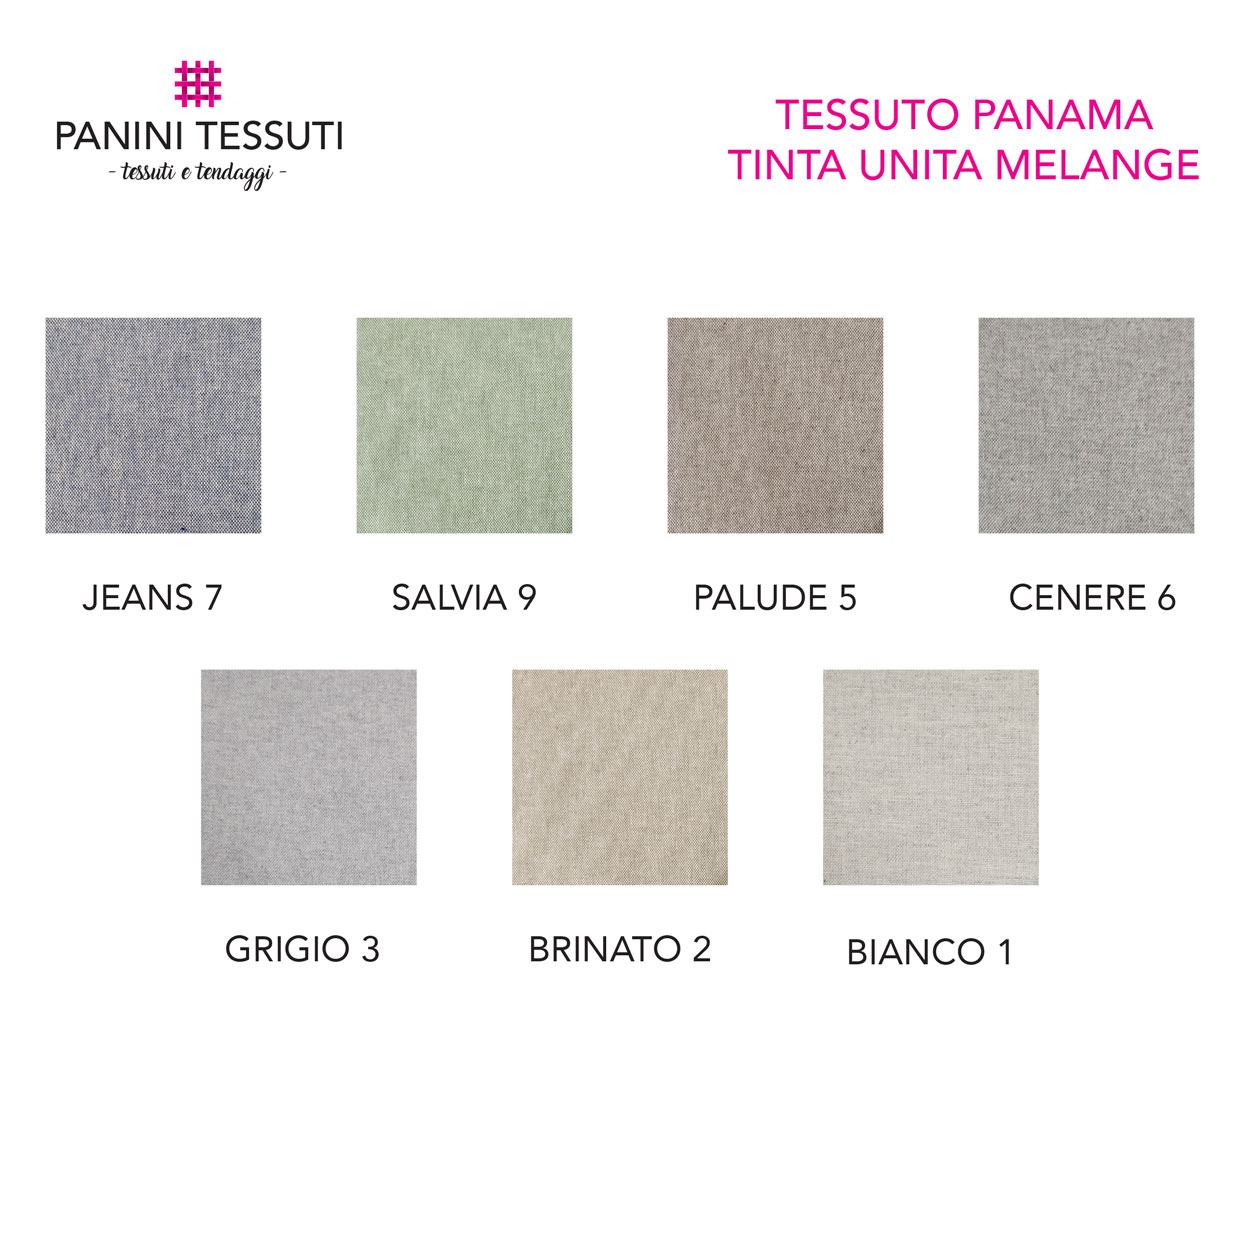 Tessuto-Panama-Tinta-Unita-Melange